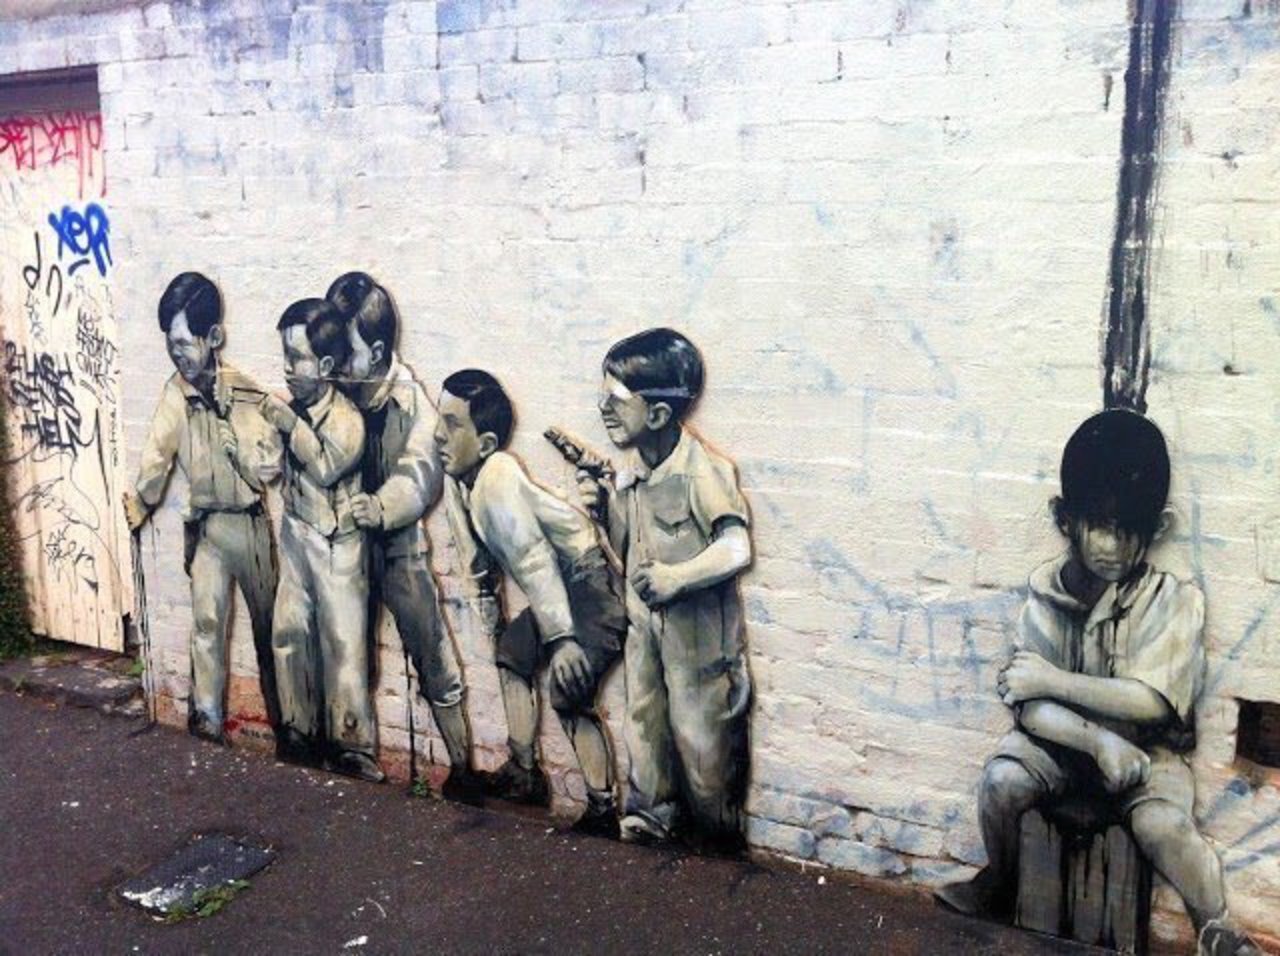 #Mural by Taylor White #Melbourne #Australia #Streetart #graffiti #art https://t.co/Eu4xSB1F5F